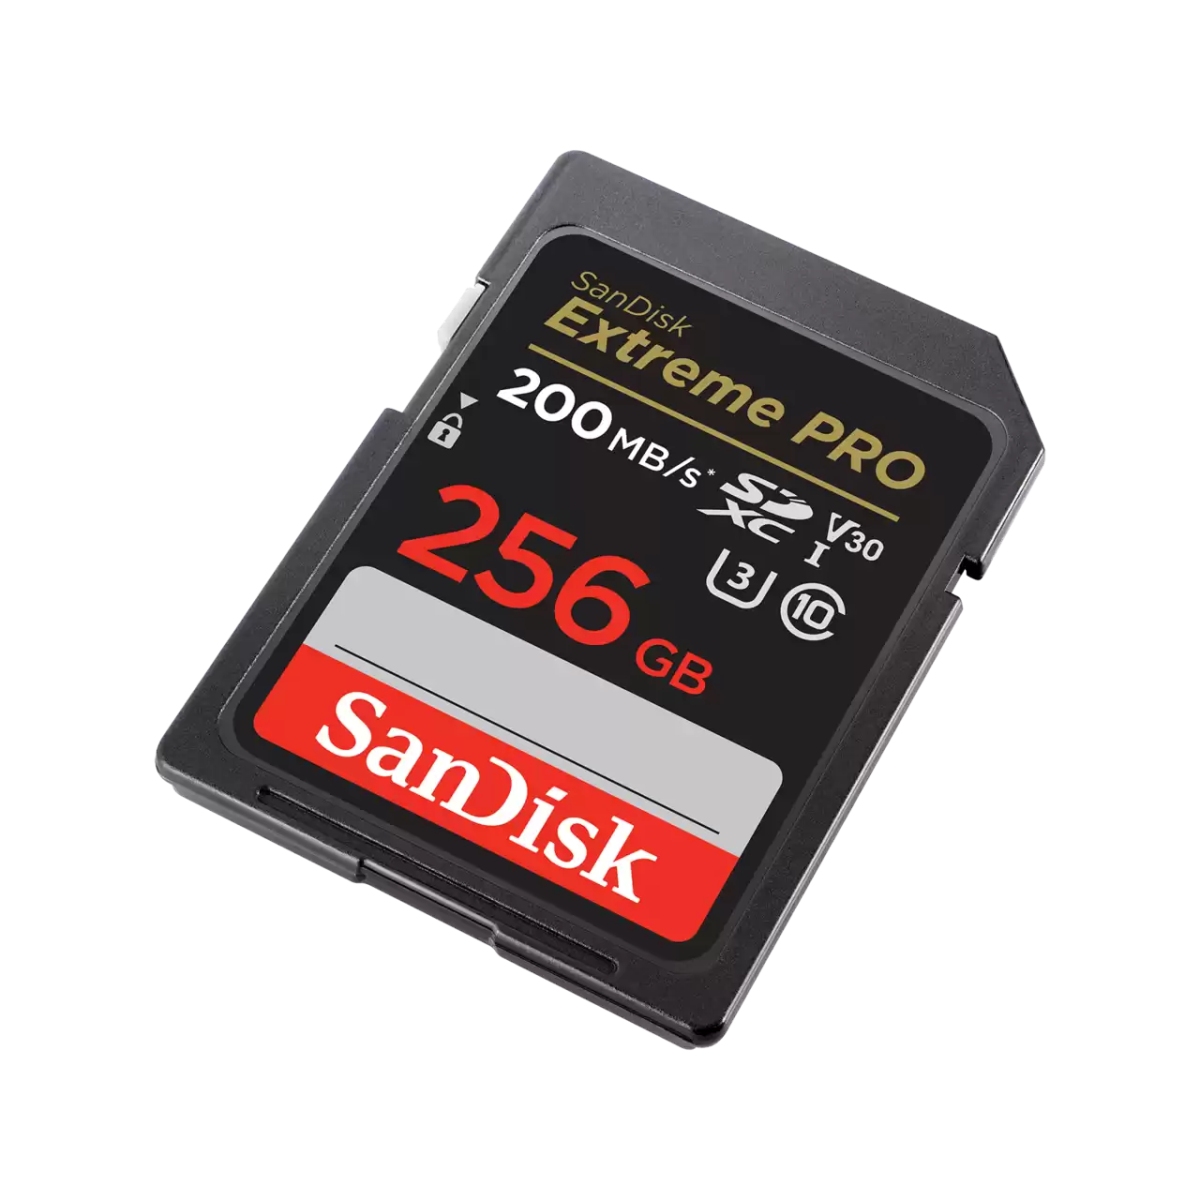 Obrázek SanDisk Extreme PRO/SDXC/256GB/200MBps/UHS-I U3 / Class 10